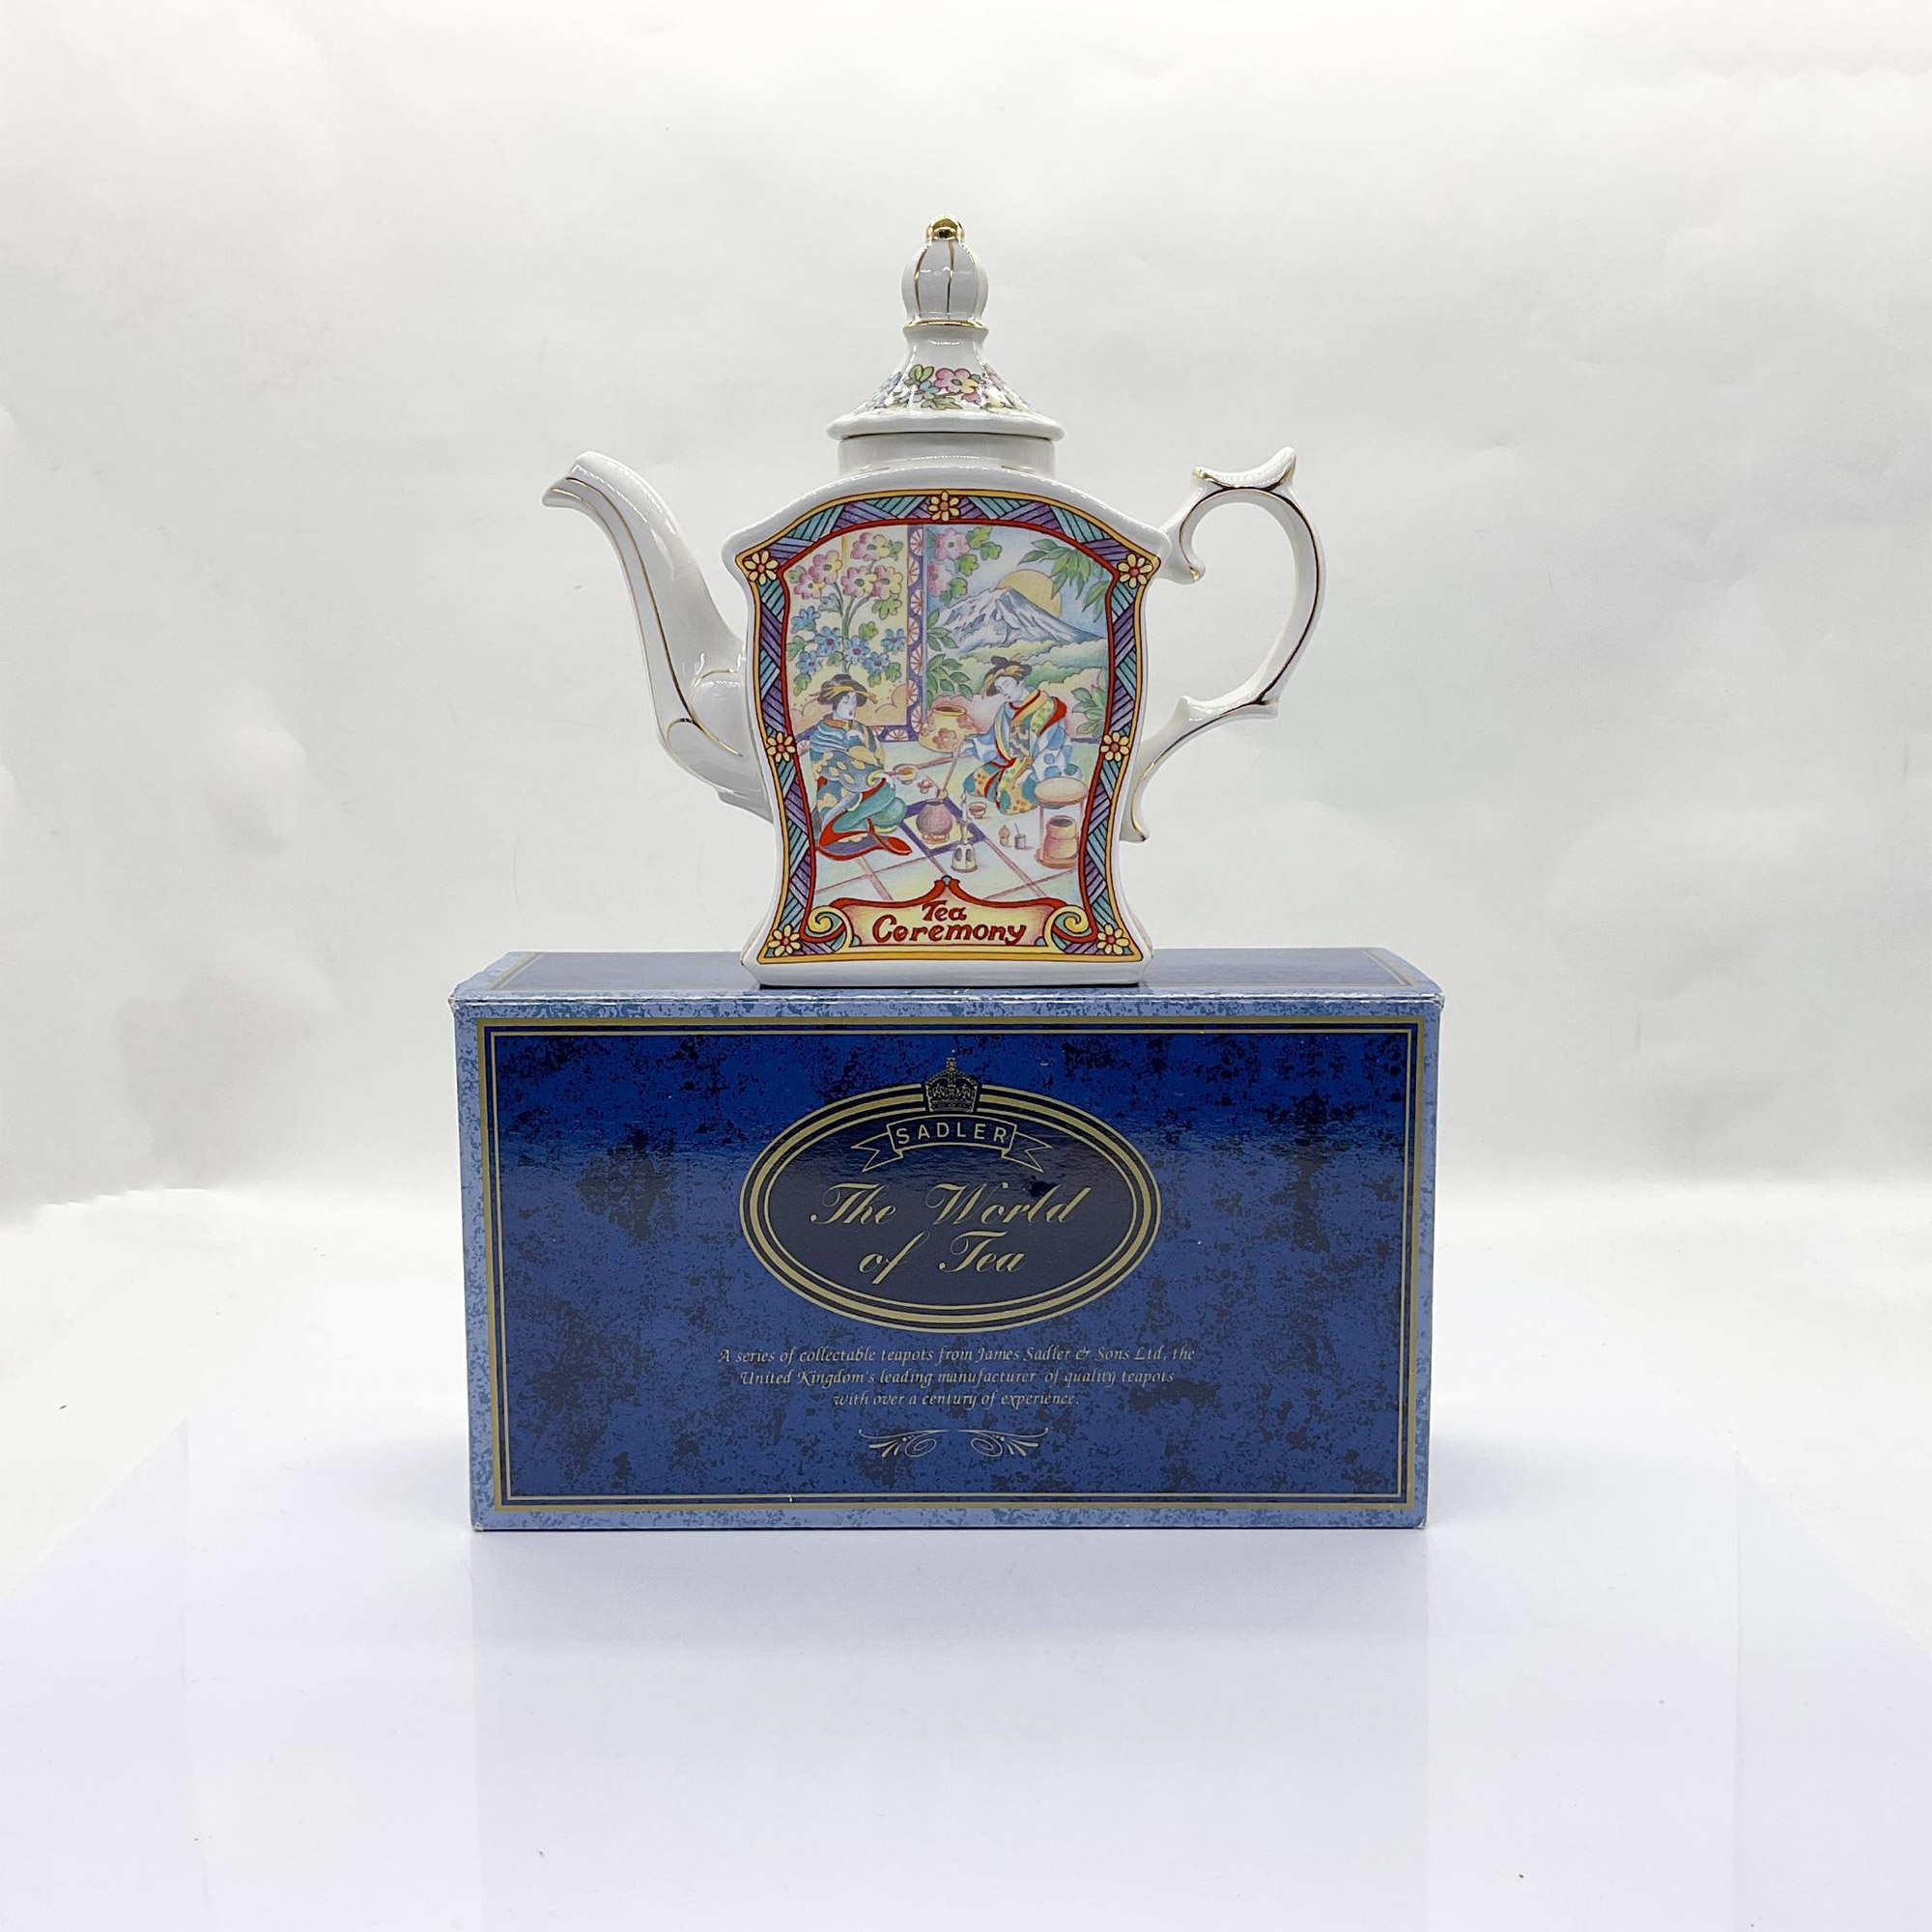 Sadler The World Of Tea Ceremony Tea Pot - Image 8 of 10